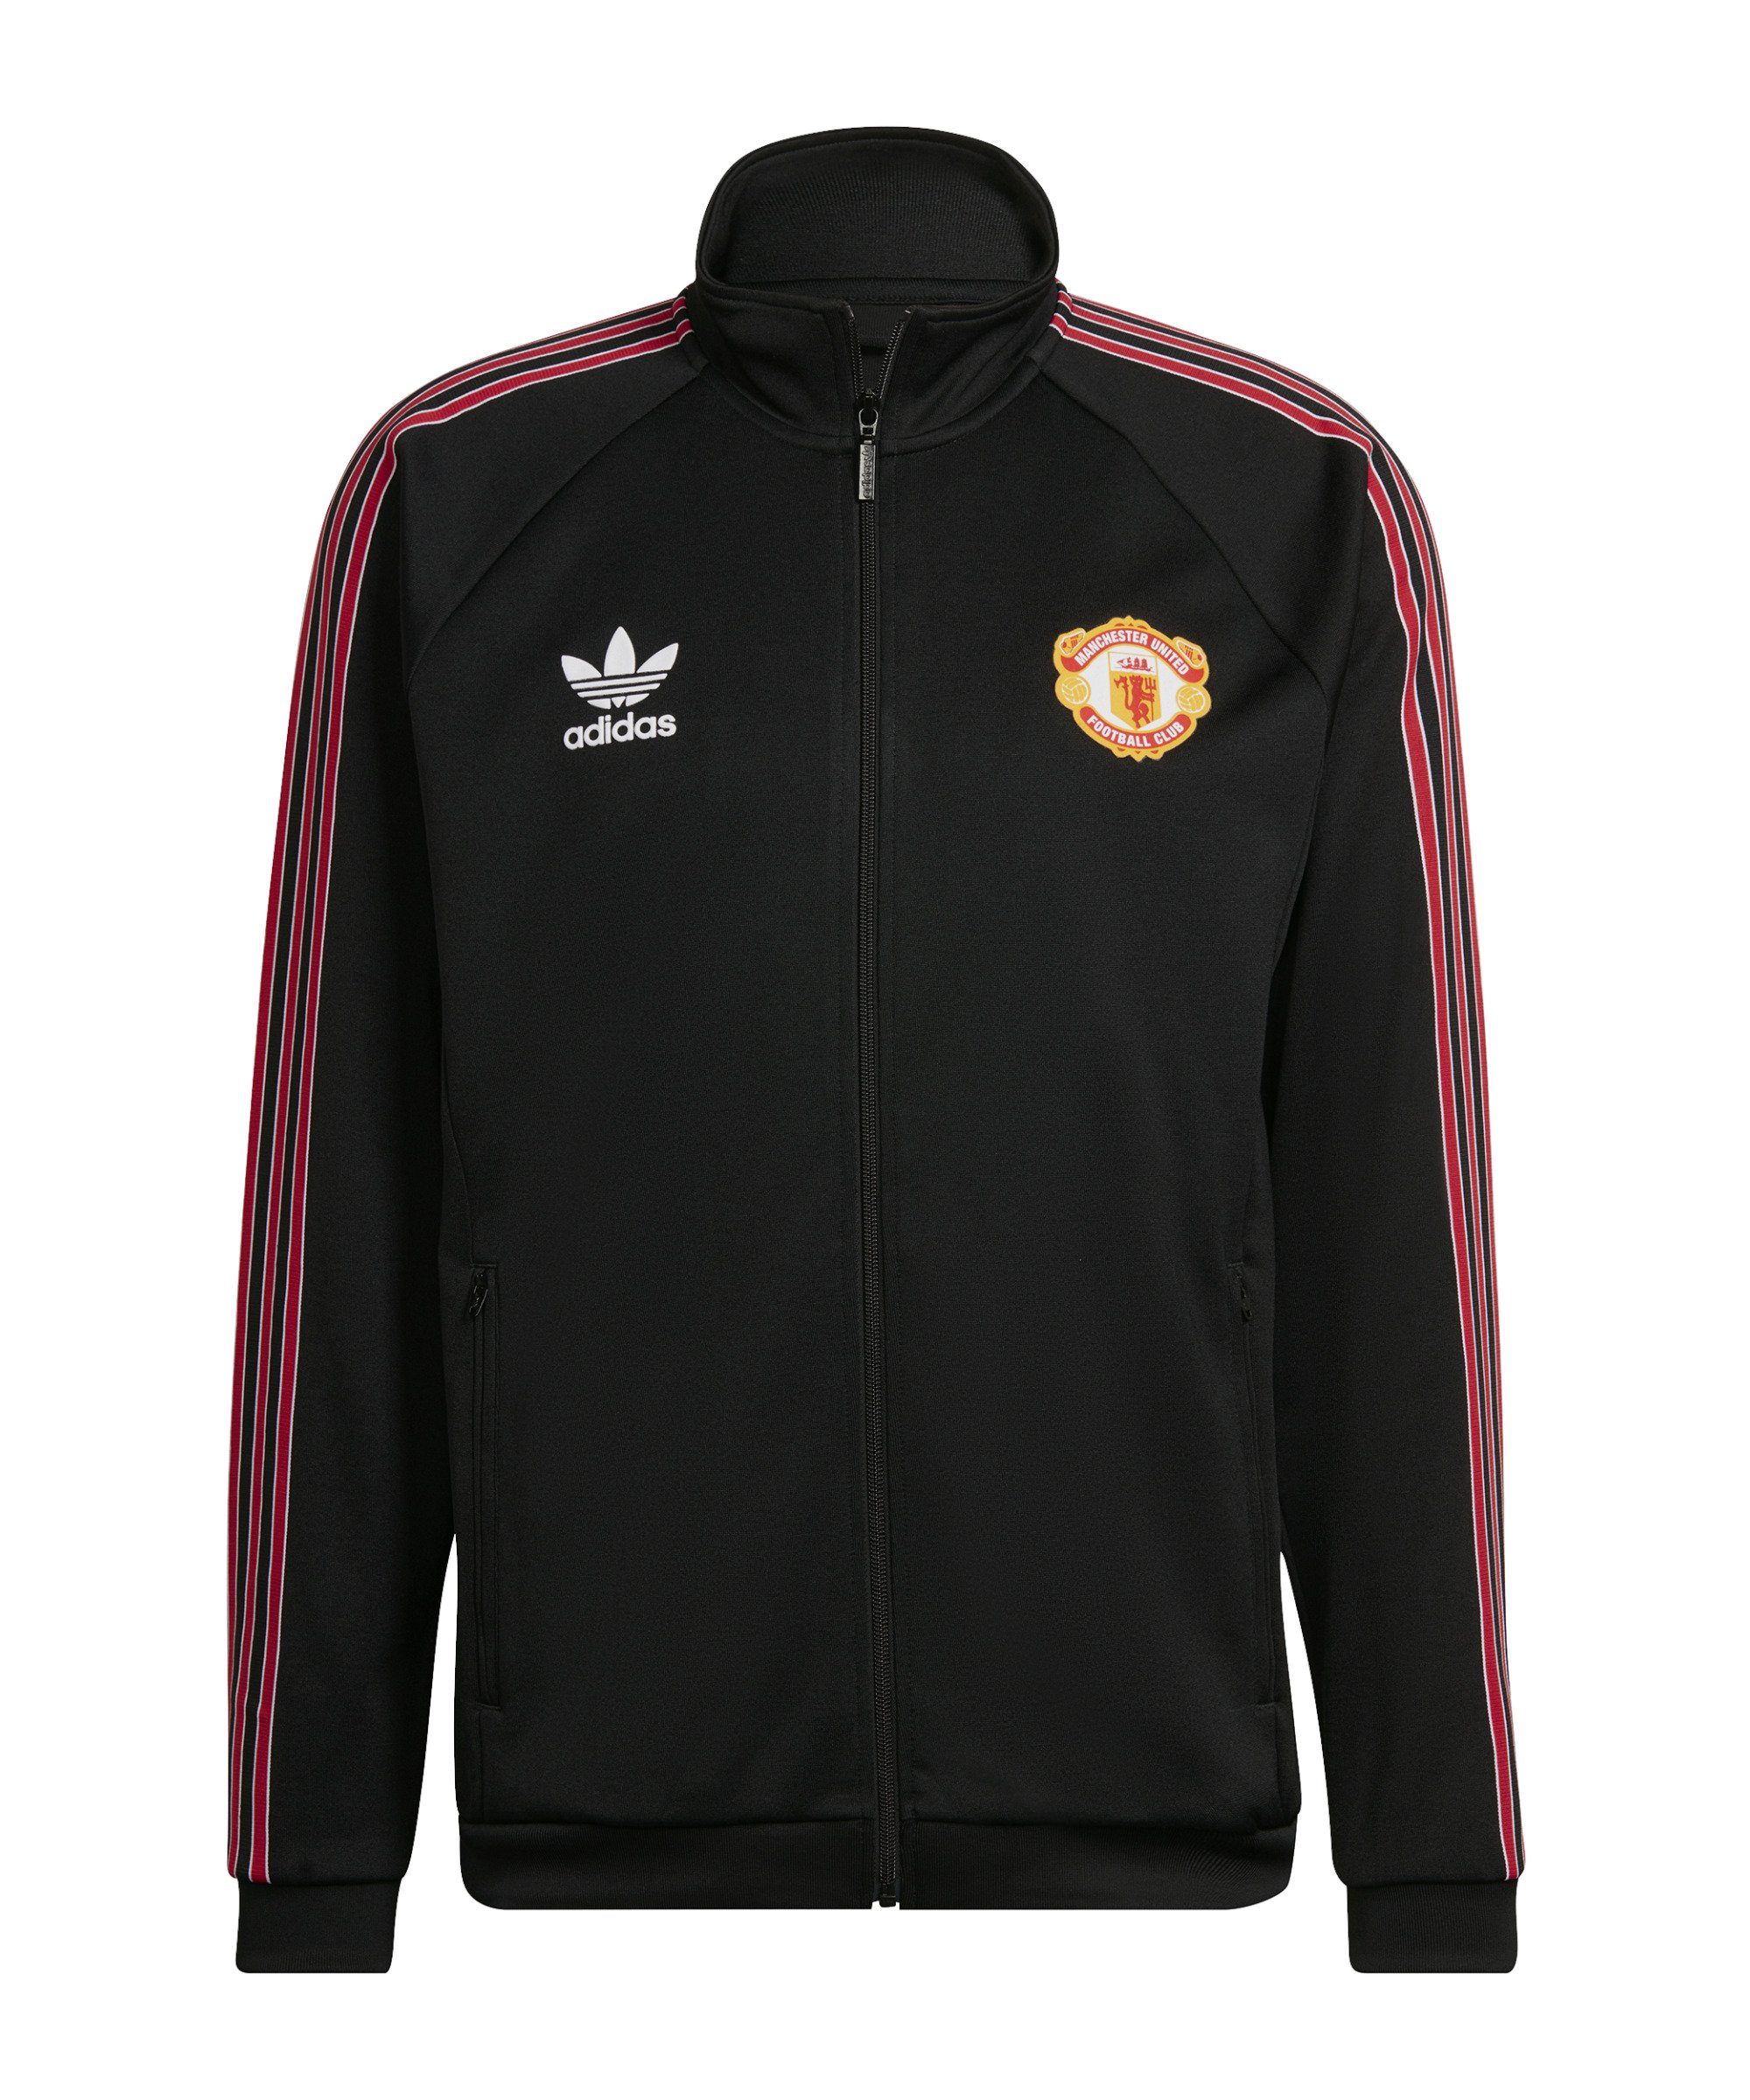 adidas Originals Sweatjacke Manchester United Jacke